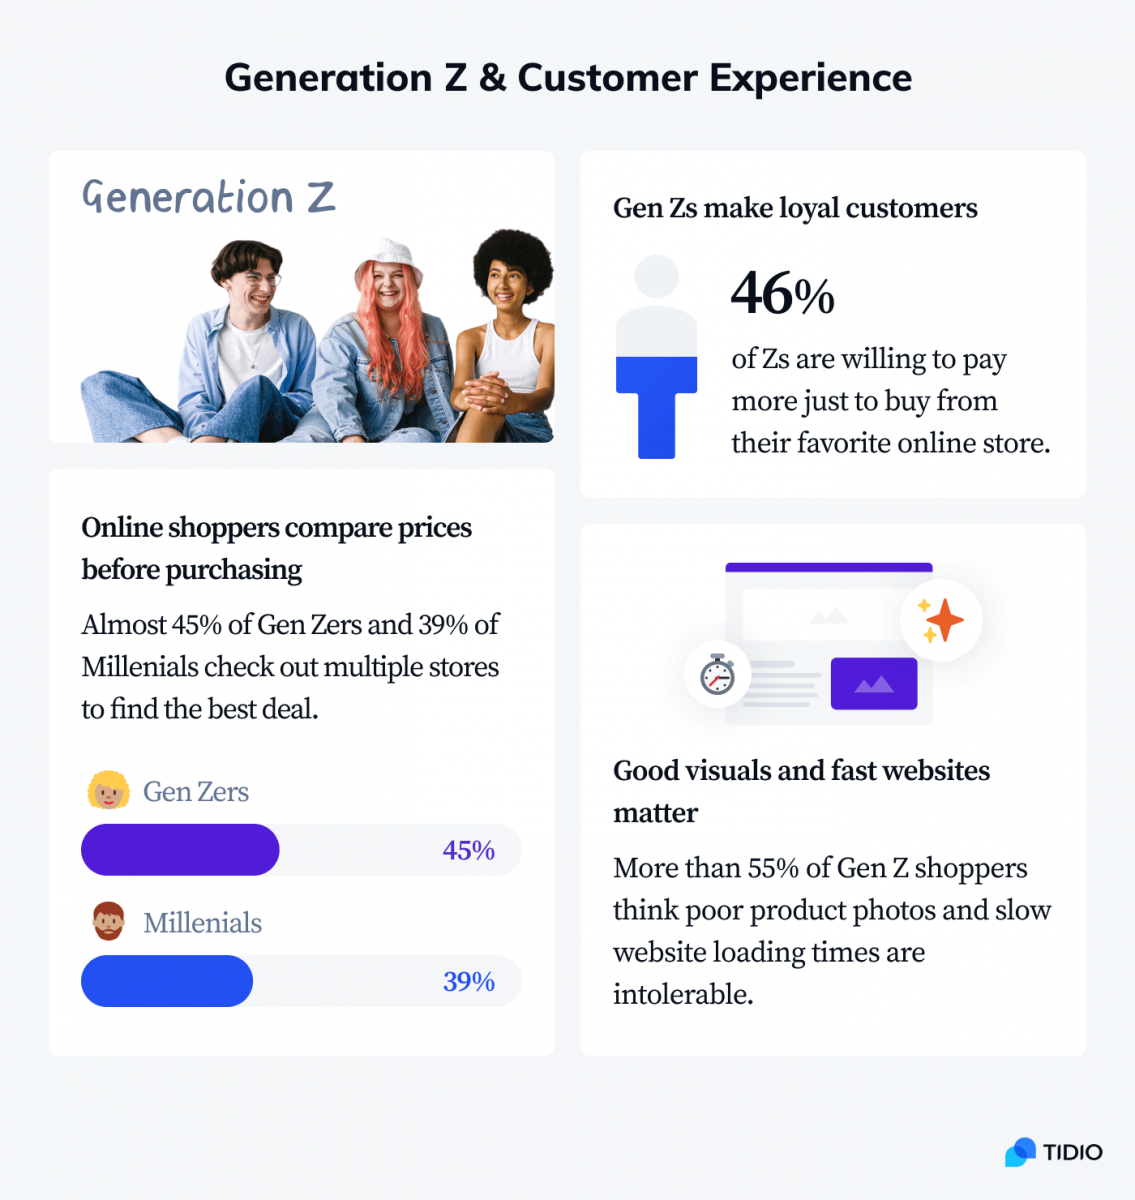 Generation Z & customer experience statistics